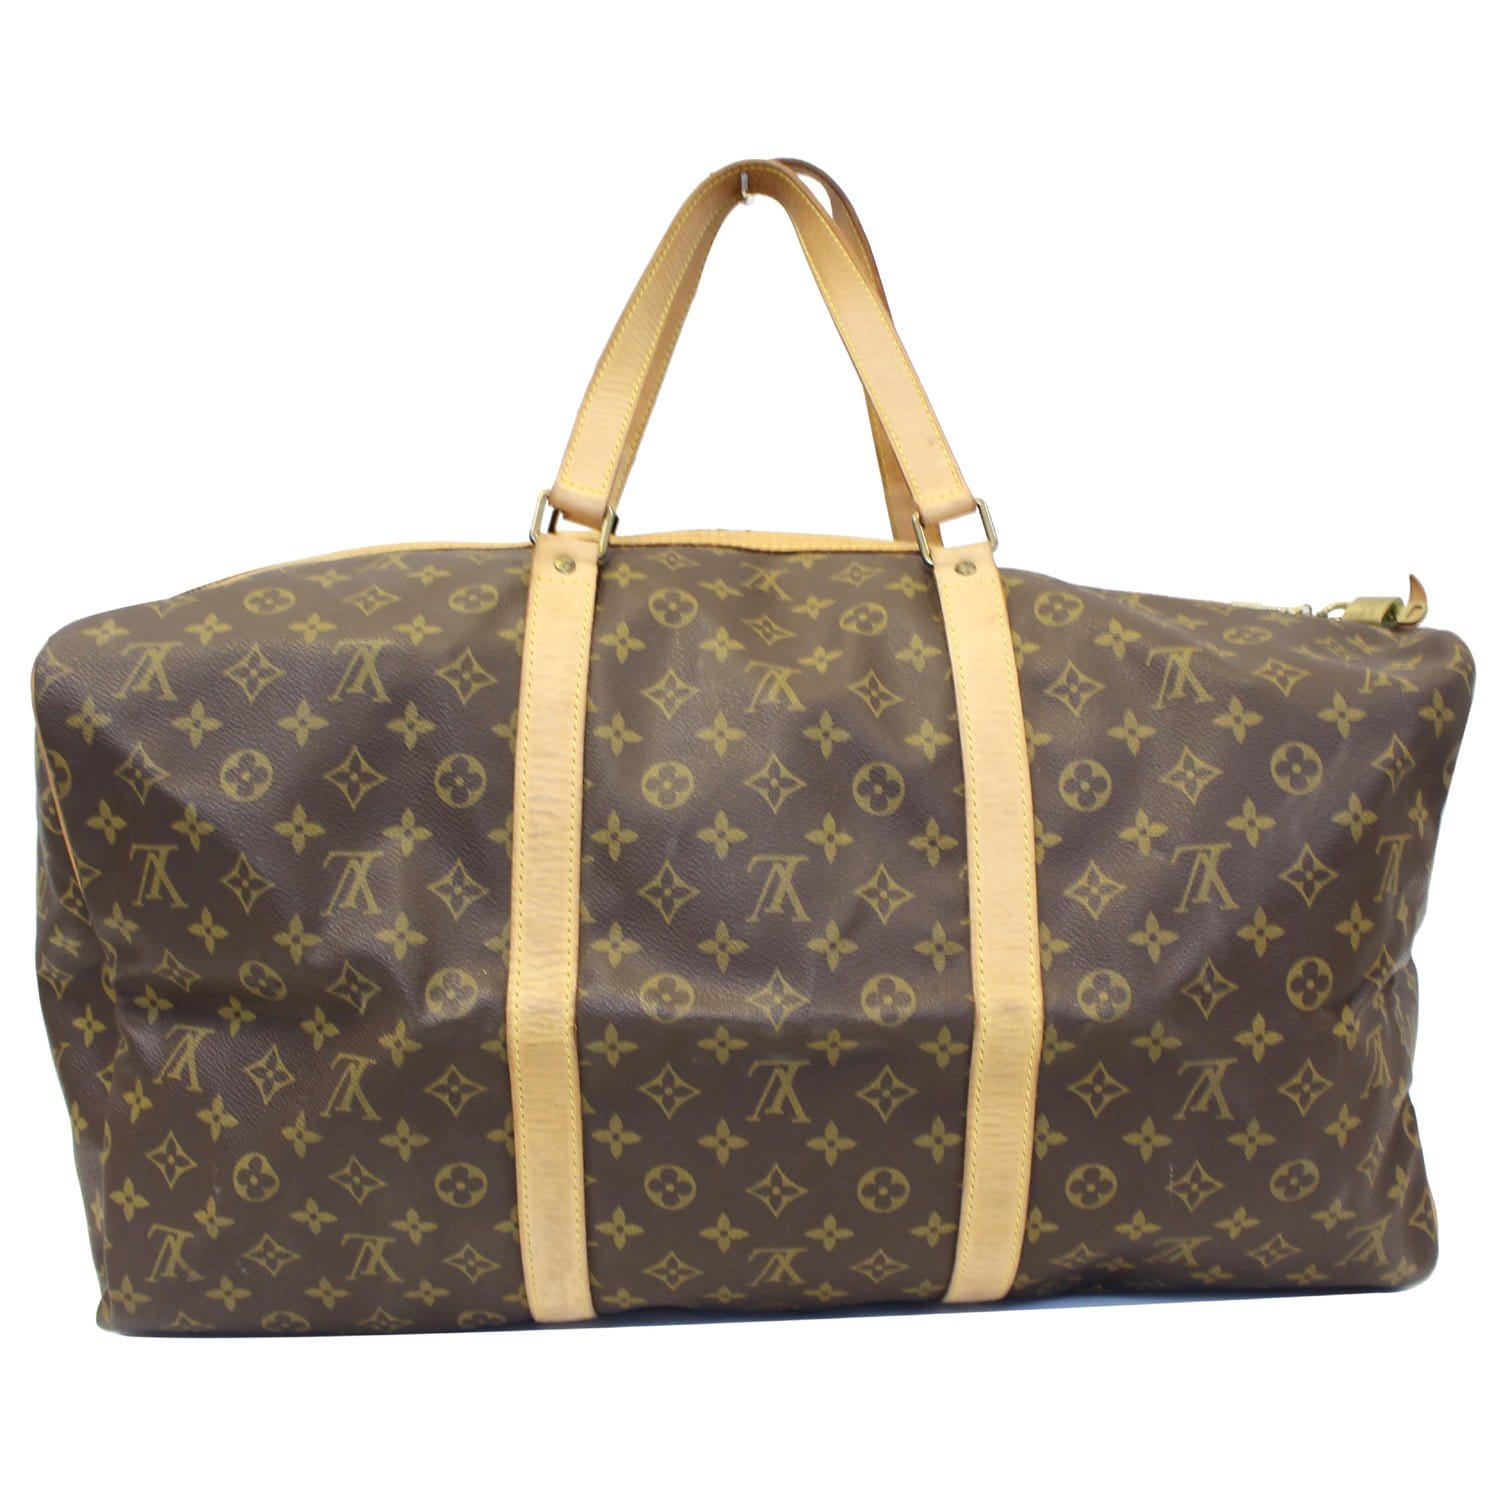 Louis Vuitton Monogram Sac Souple 55 Keepall Bag